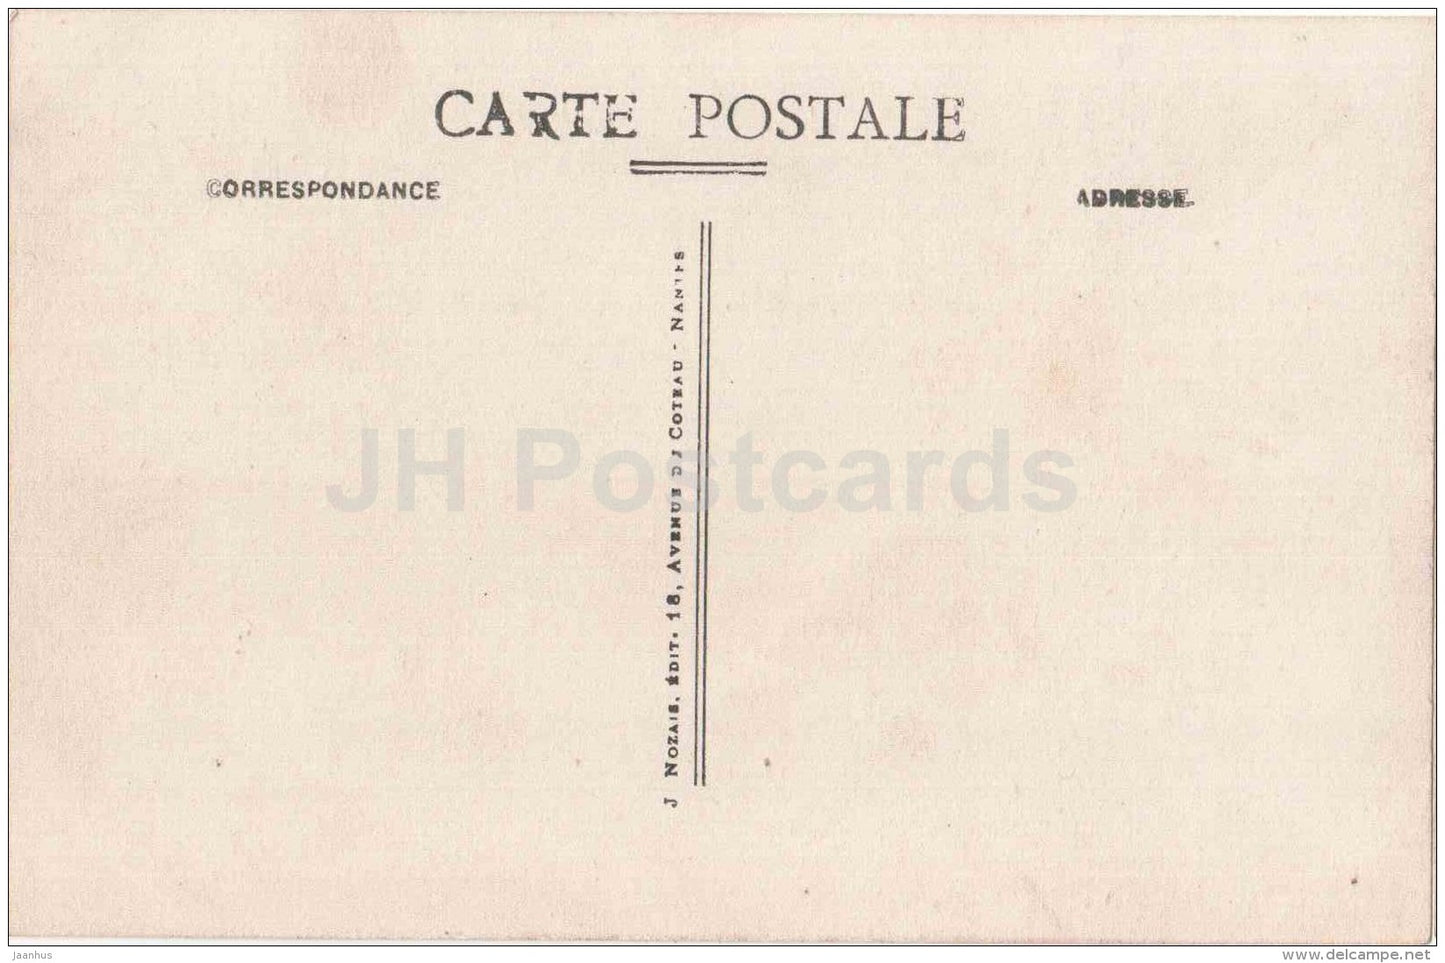 Vue Generale prise du Pont transbordeur - port - Nantes - France - 75 - Gilbert - old postcard - unused - JH Postcards